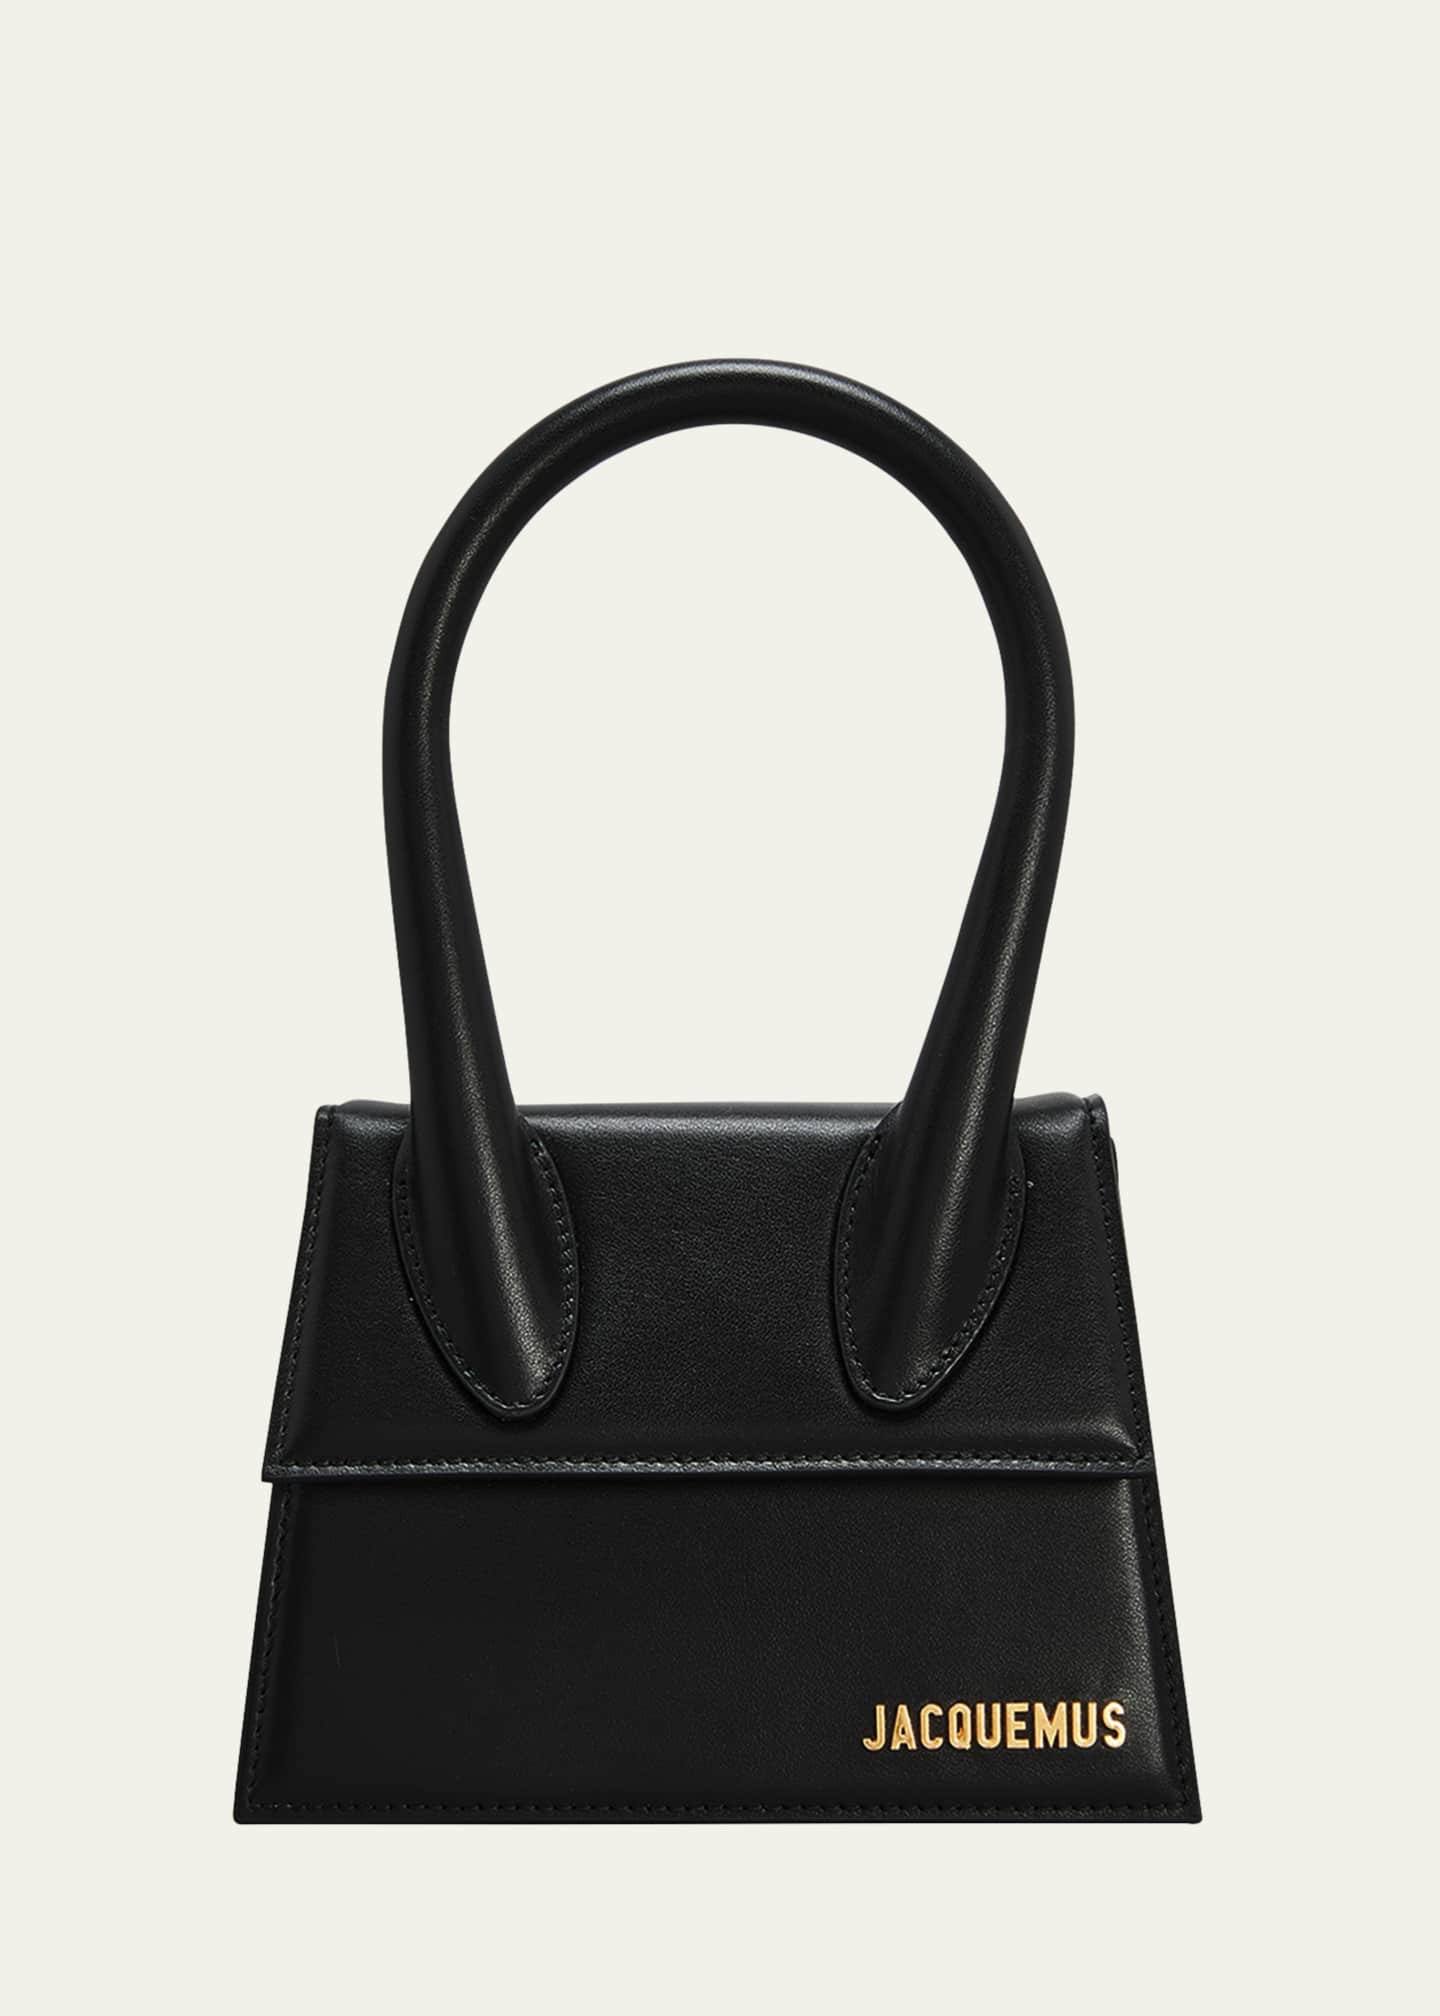 Jacquemus Le Chiquito Top-Handle Bag